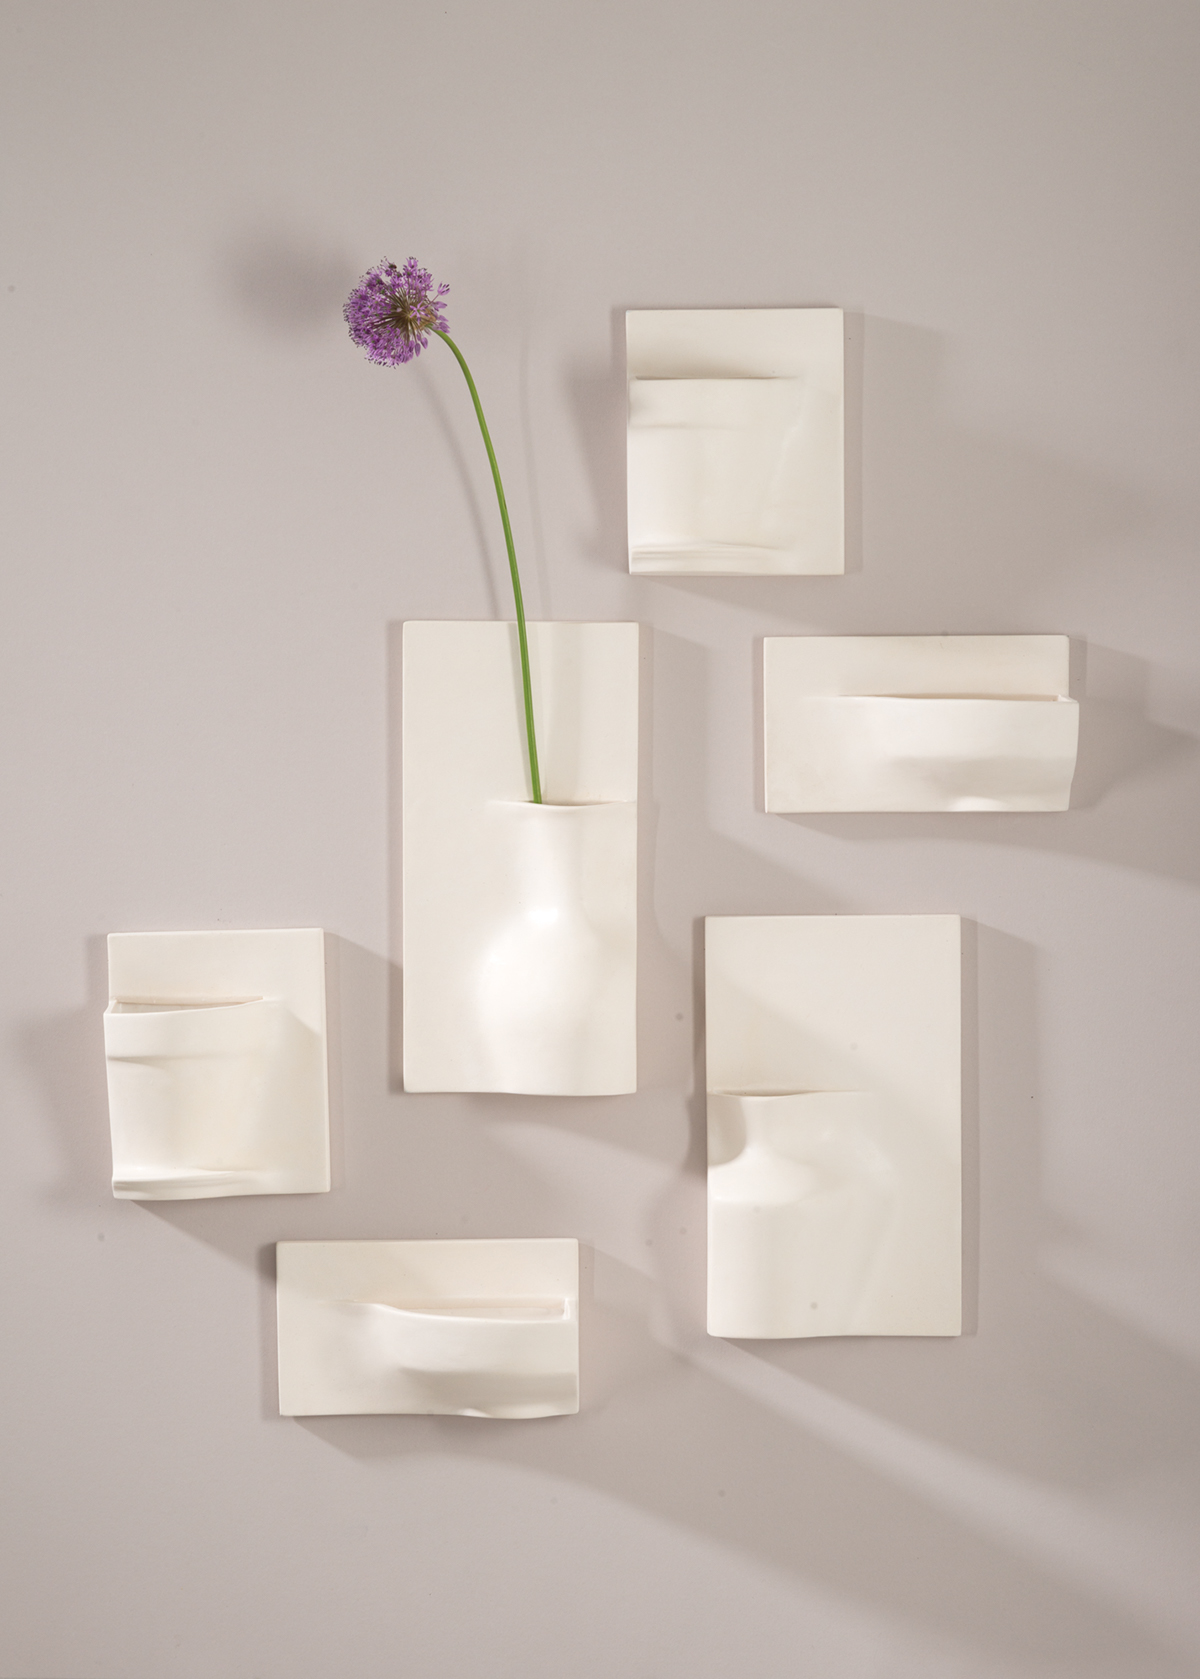 slip-casting ceramics  wall decor Vase Pottery flower pot bowl risd Grad Show 2015 vessel wall art